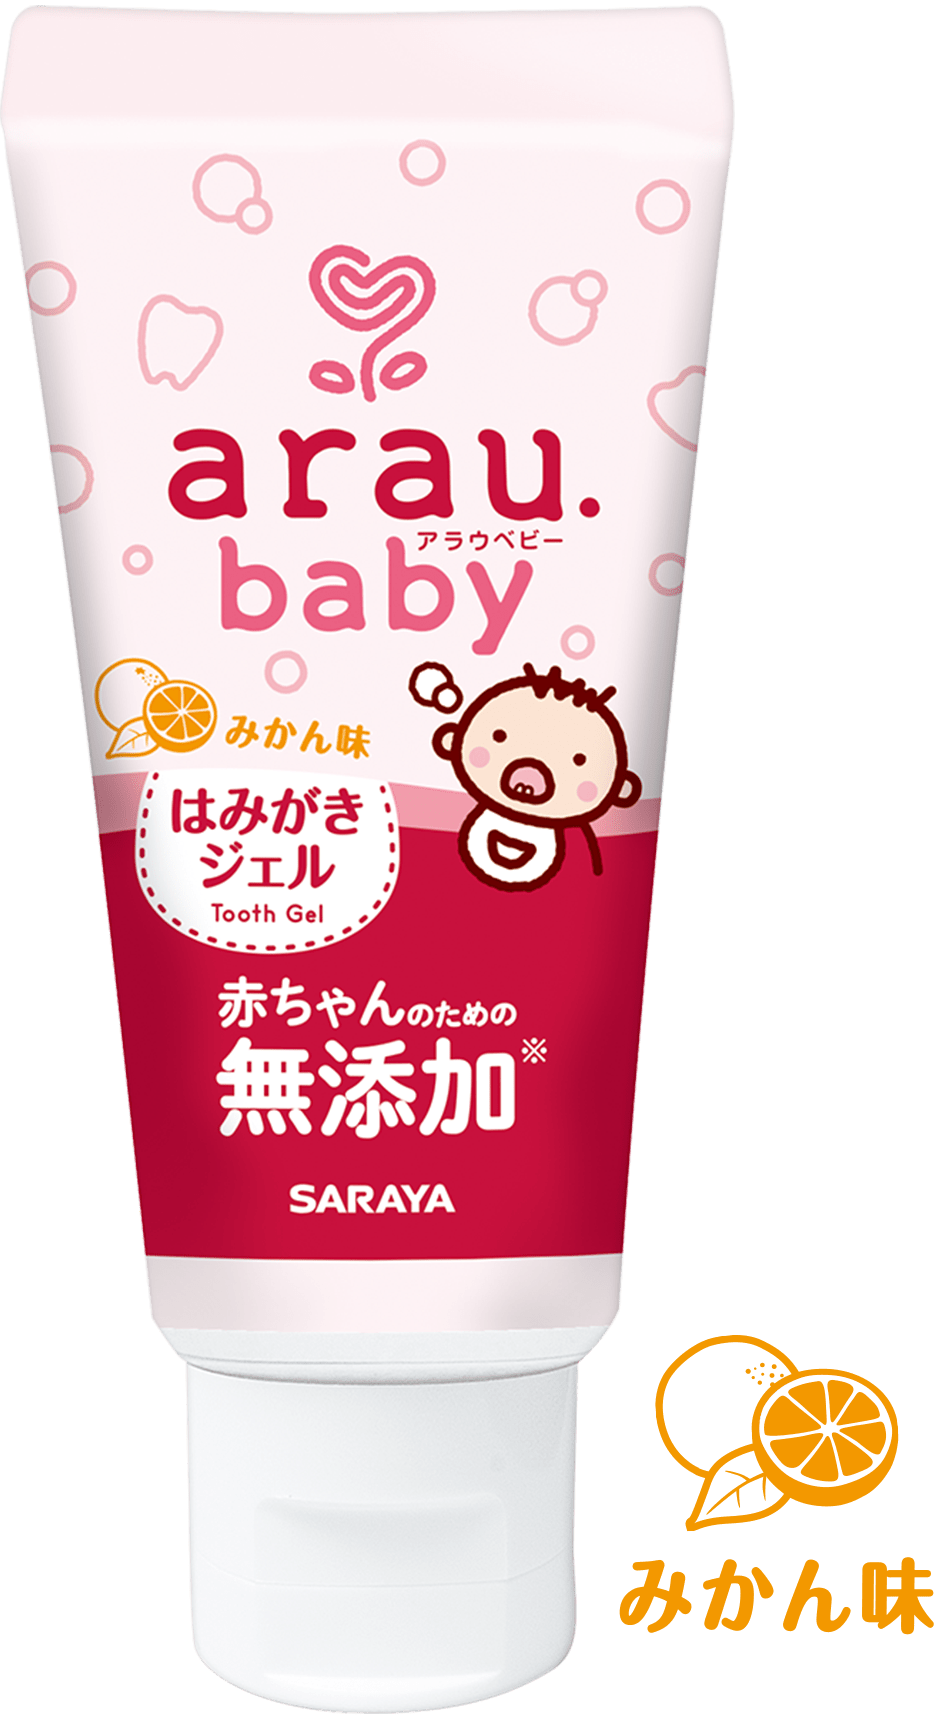 araubaby, 純皂, 愛樂寶寶貝,嬰兒刷牙,初生嬰兒